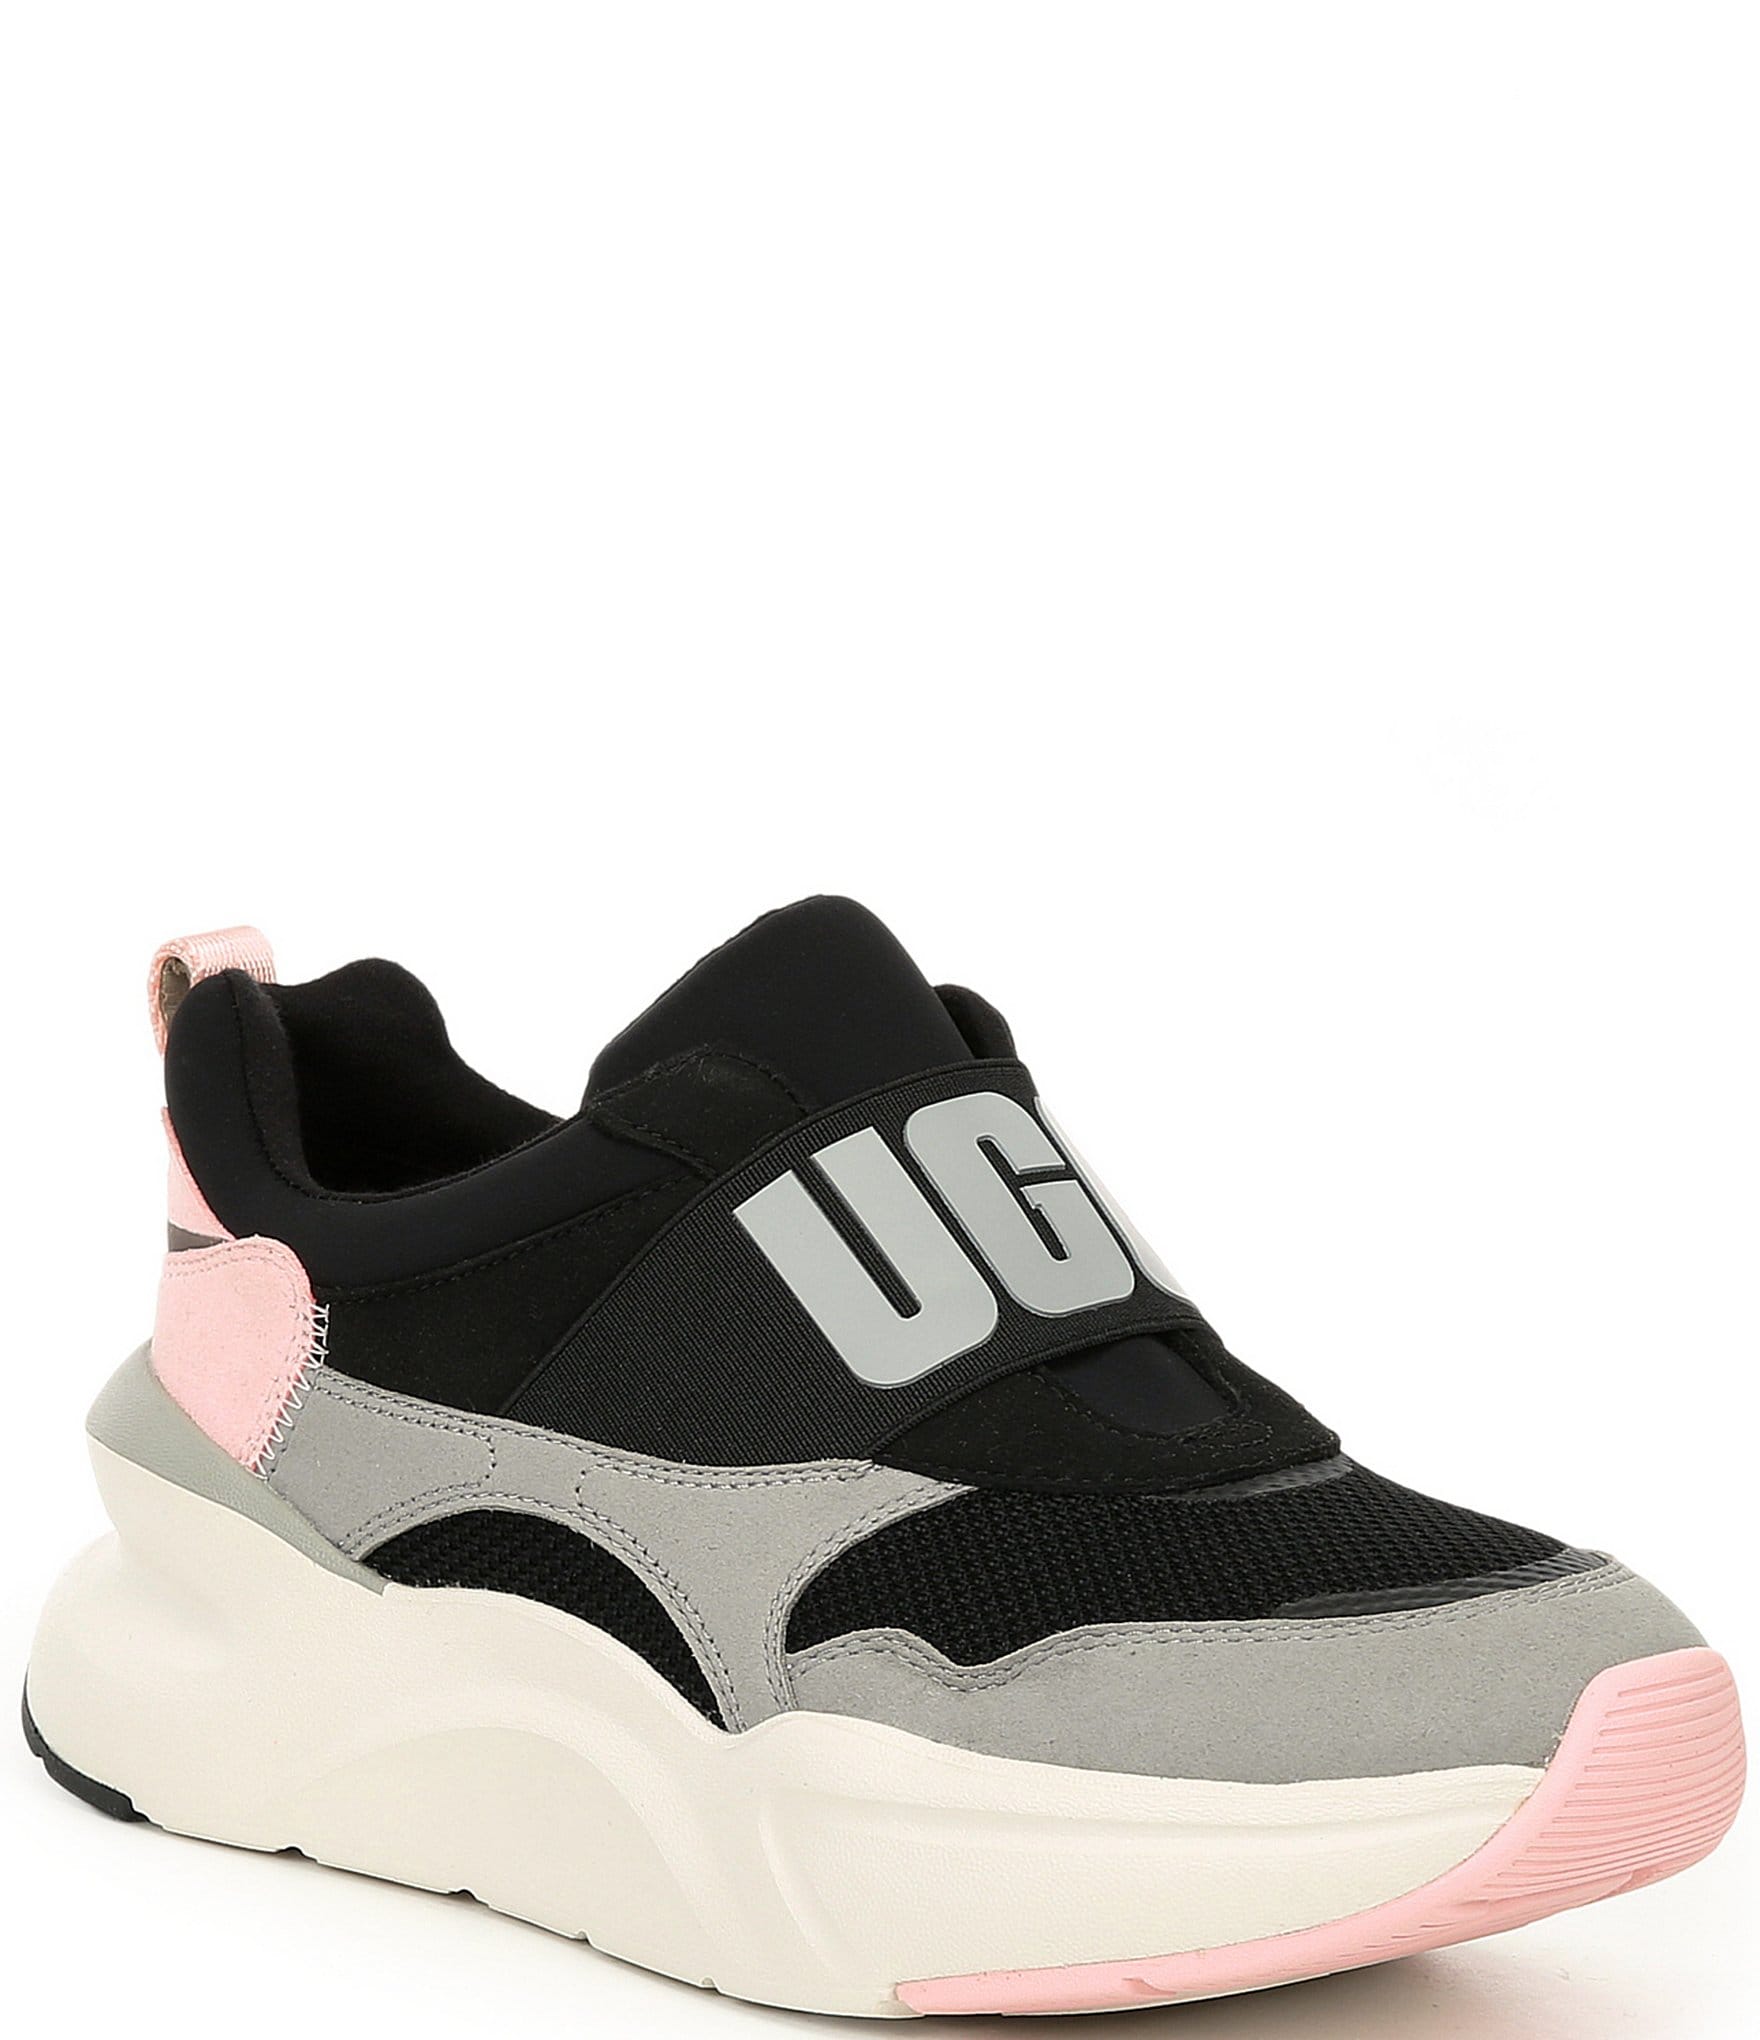 Buy > ugg womens sneakers > in stock